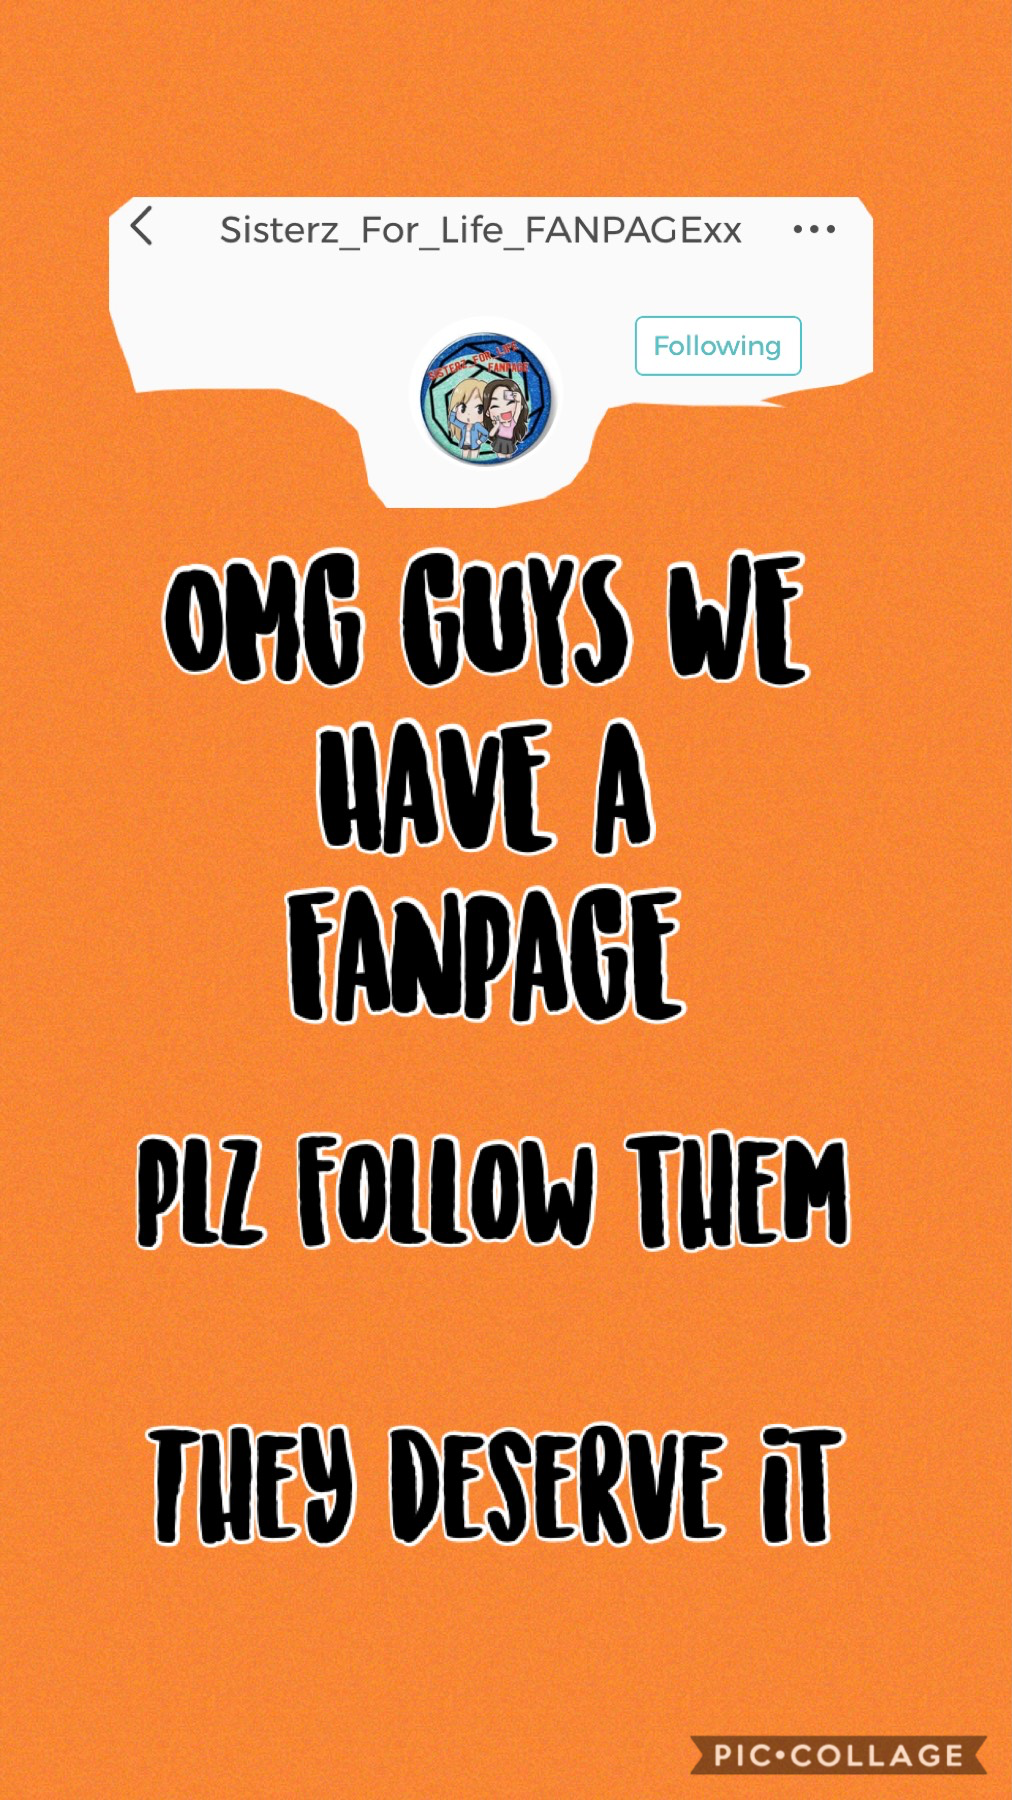 Plz follow them

It’s amazing

We now have a FANPAGE guys